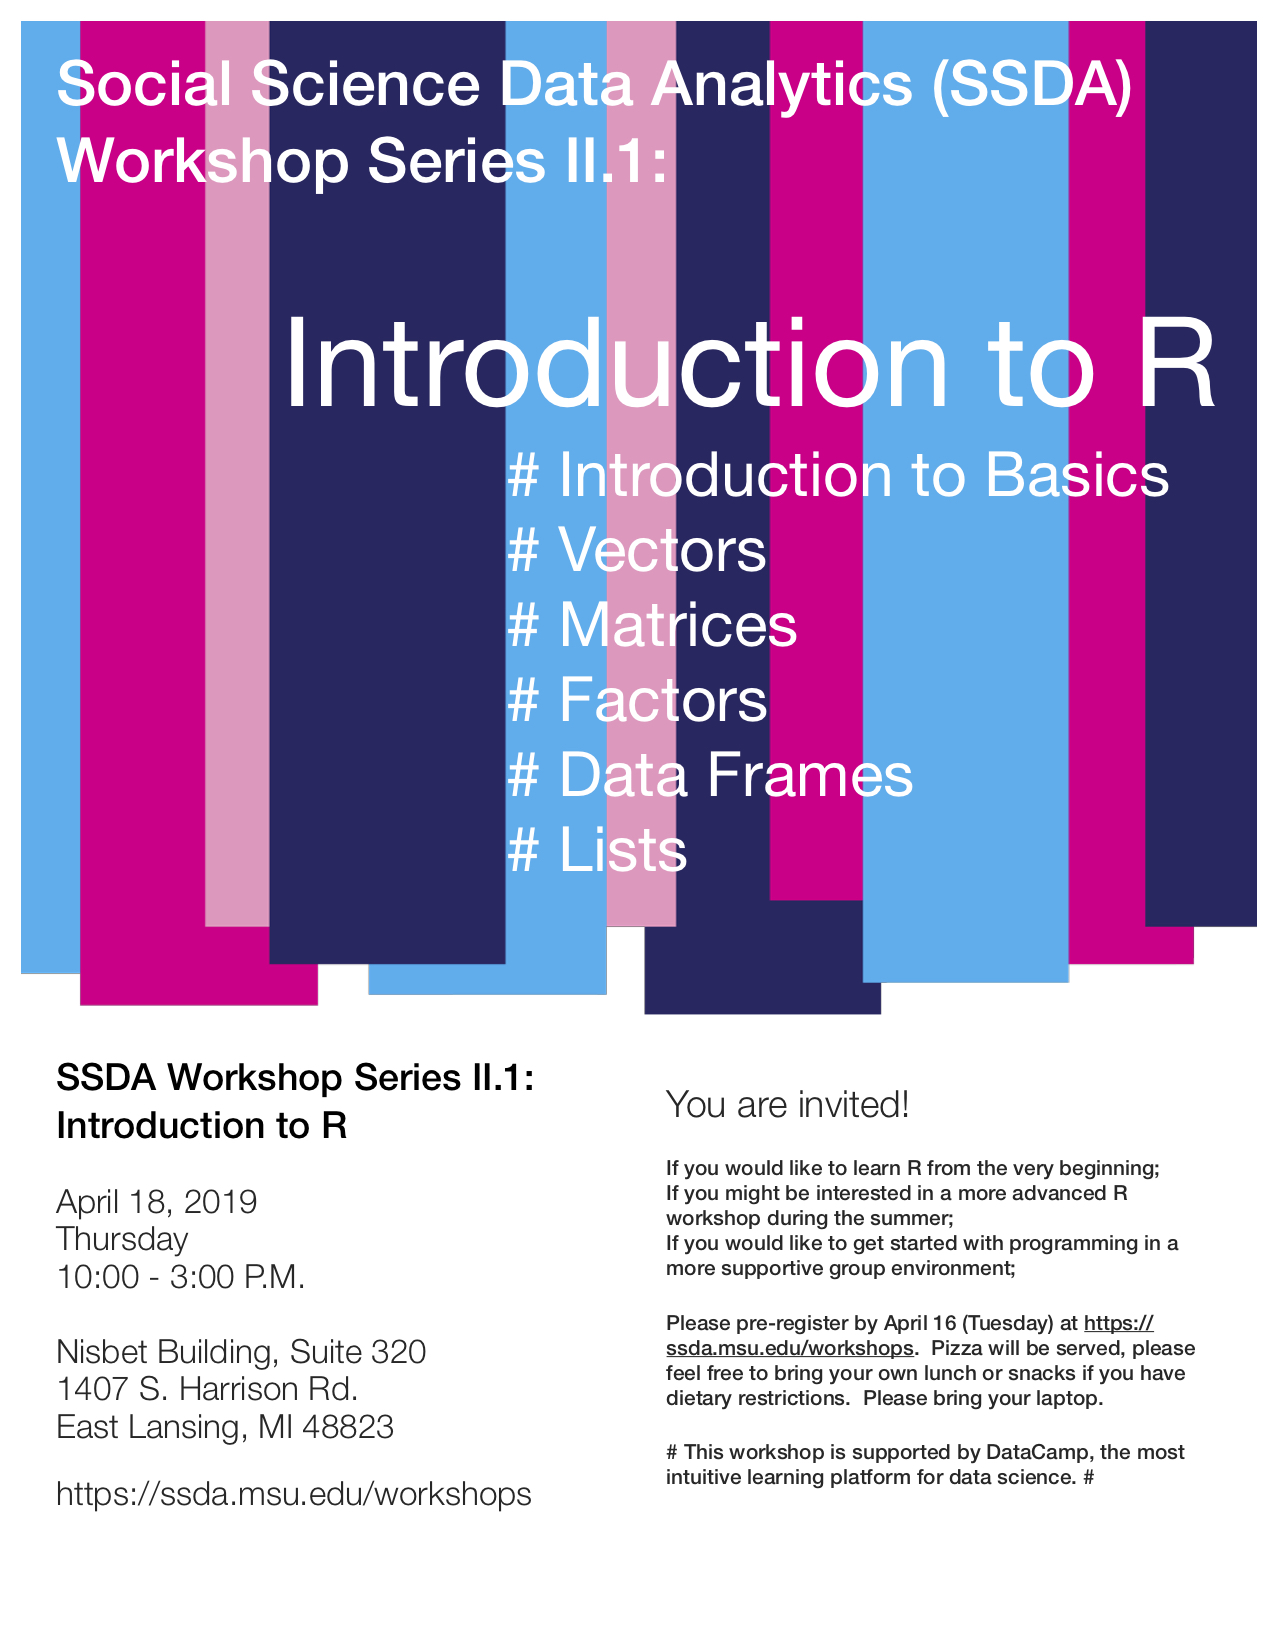 SSDA Workshop Flyer -- Introduction to R